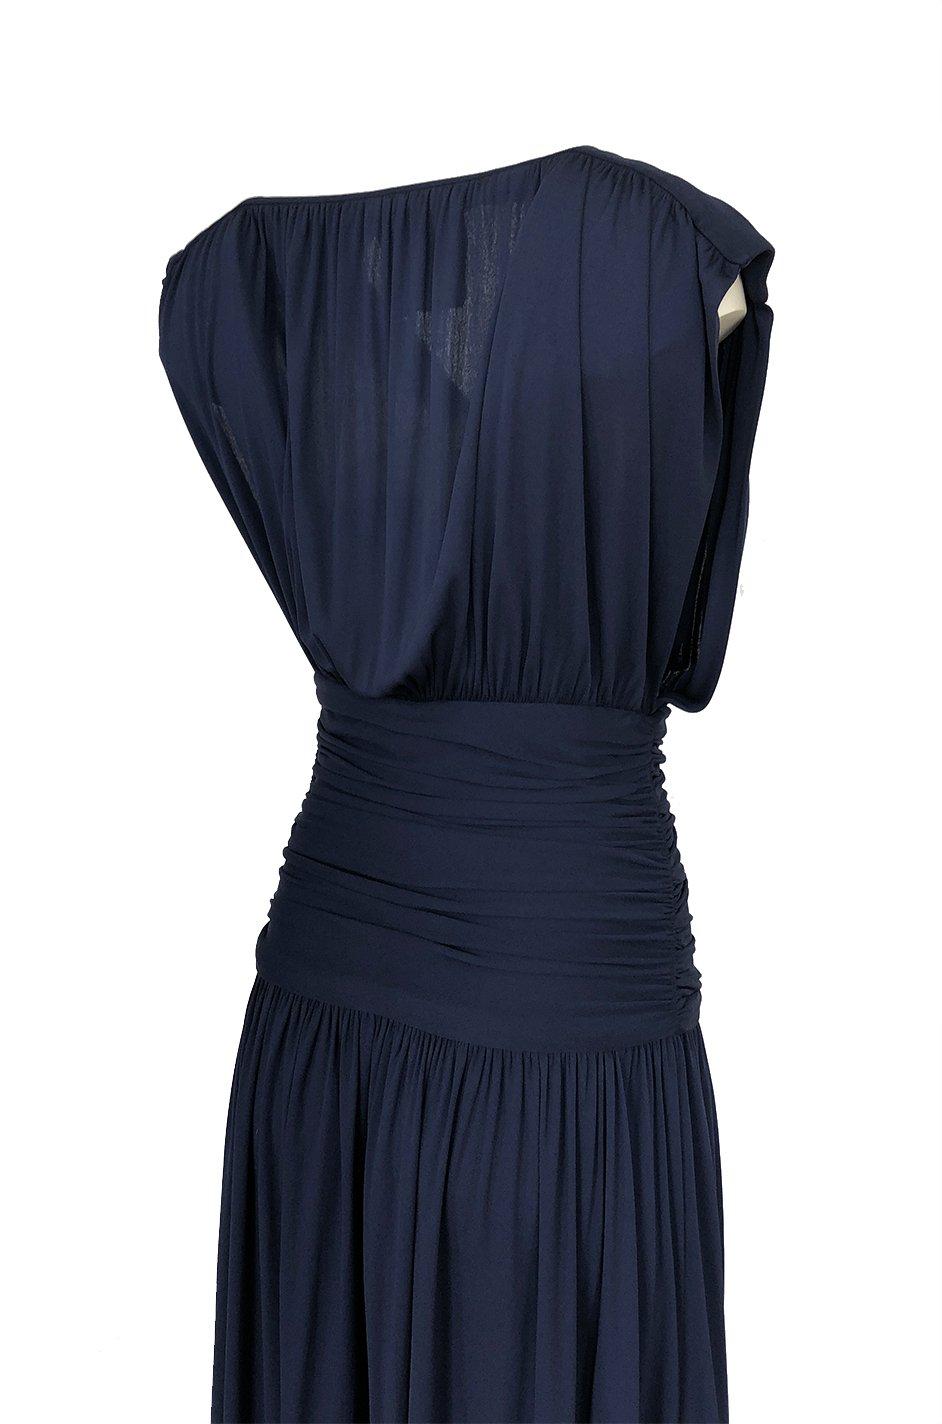 c1991 Yves Saint Laurent Deep Plunge Front Blue Draped Silk Jersey Dress 2